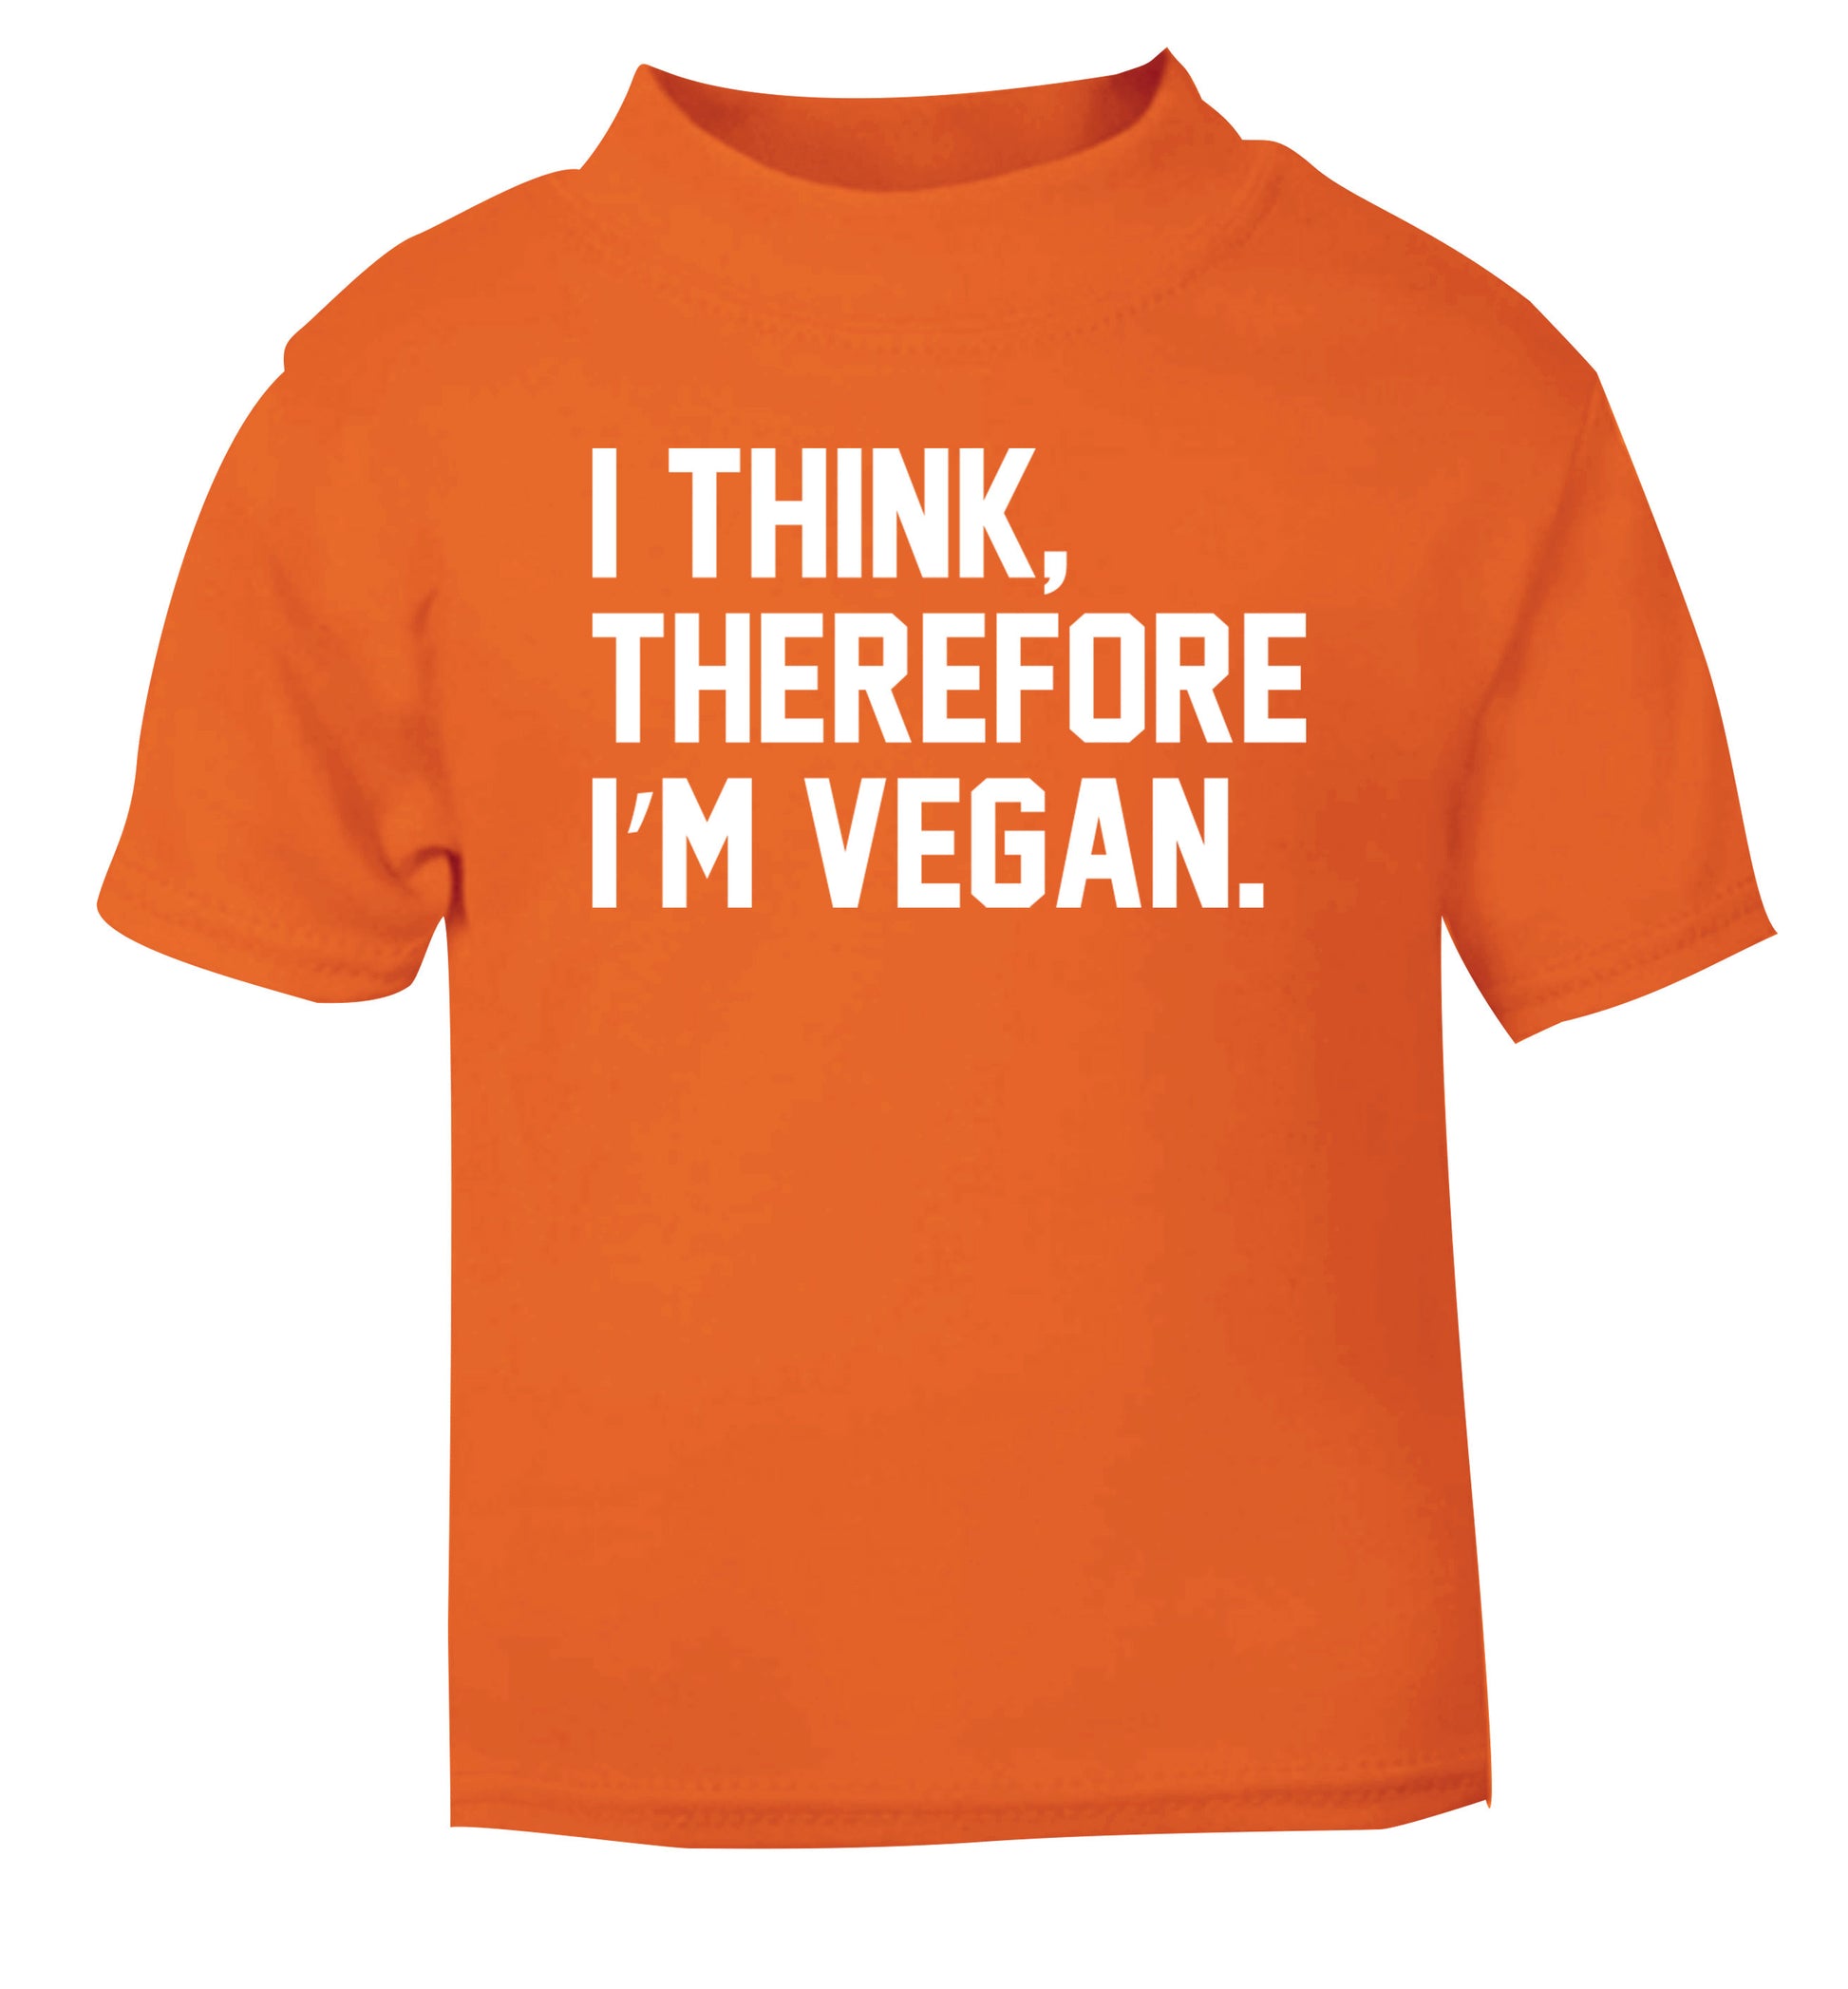 I think therefore I'm vegan orange Baby Toddler Tshirt 2 Years